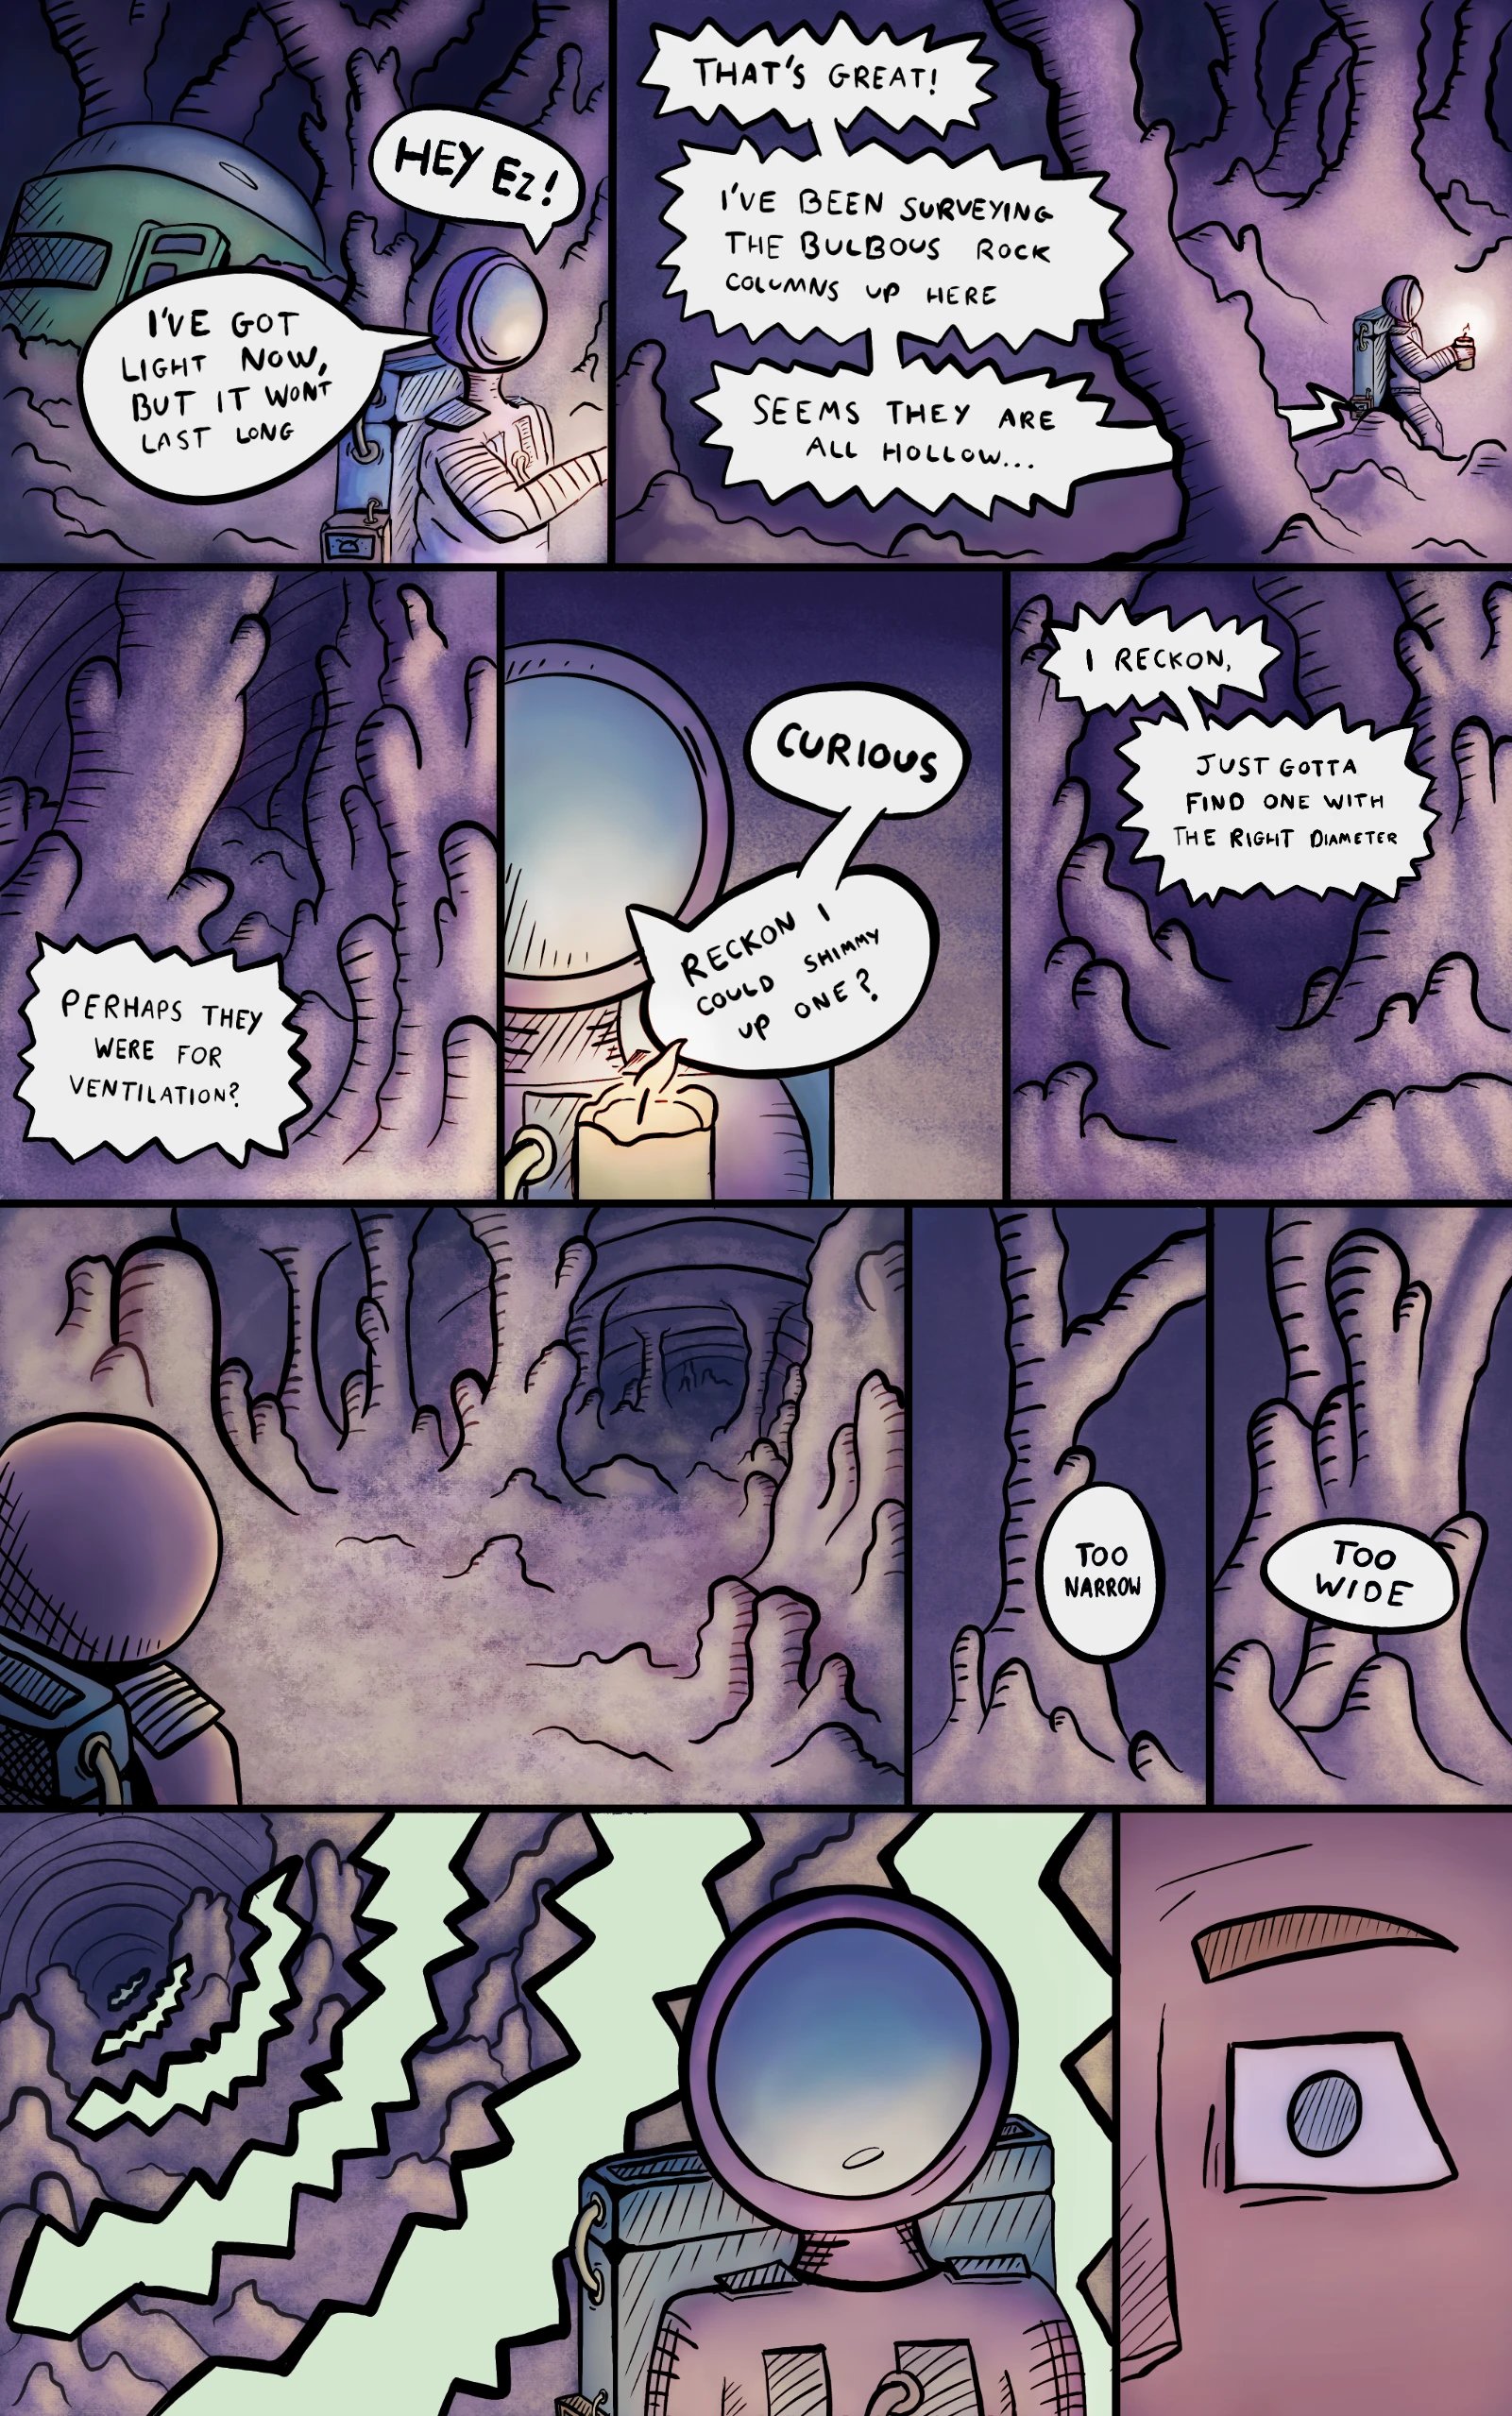 comic page 6